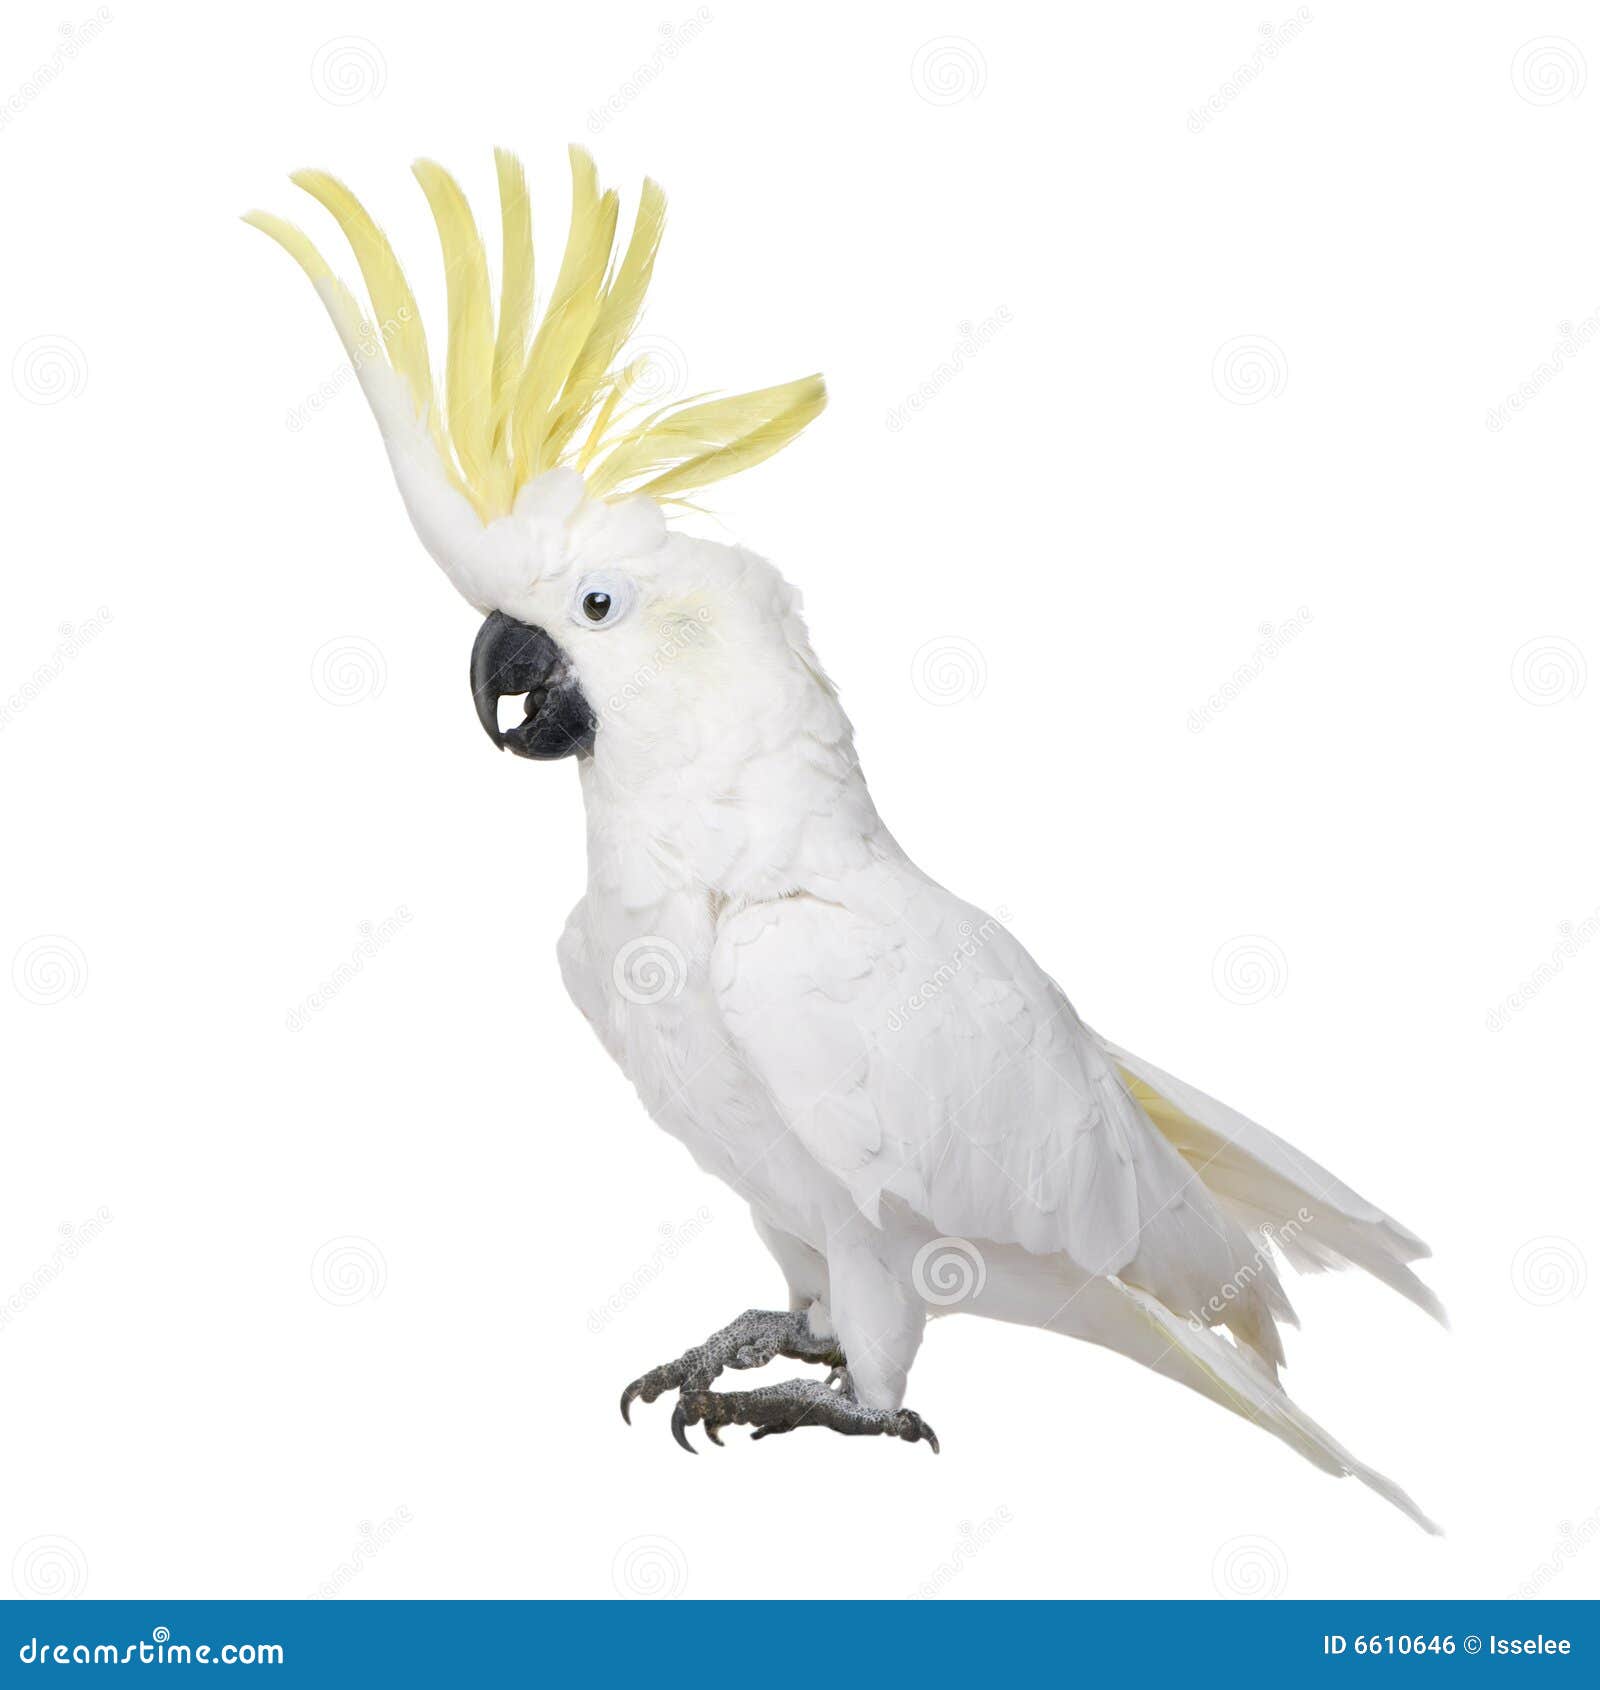 sulphur-crested cockatoo (22 years)